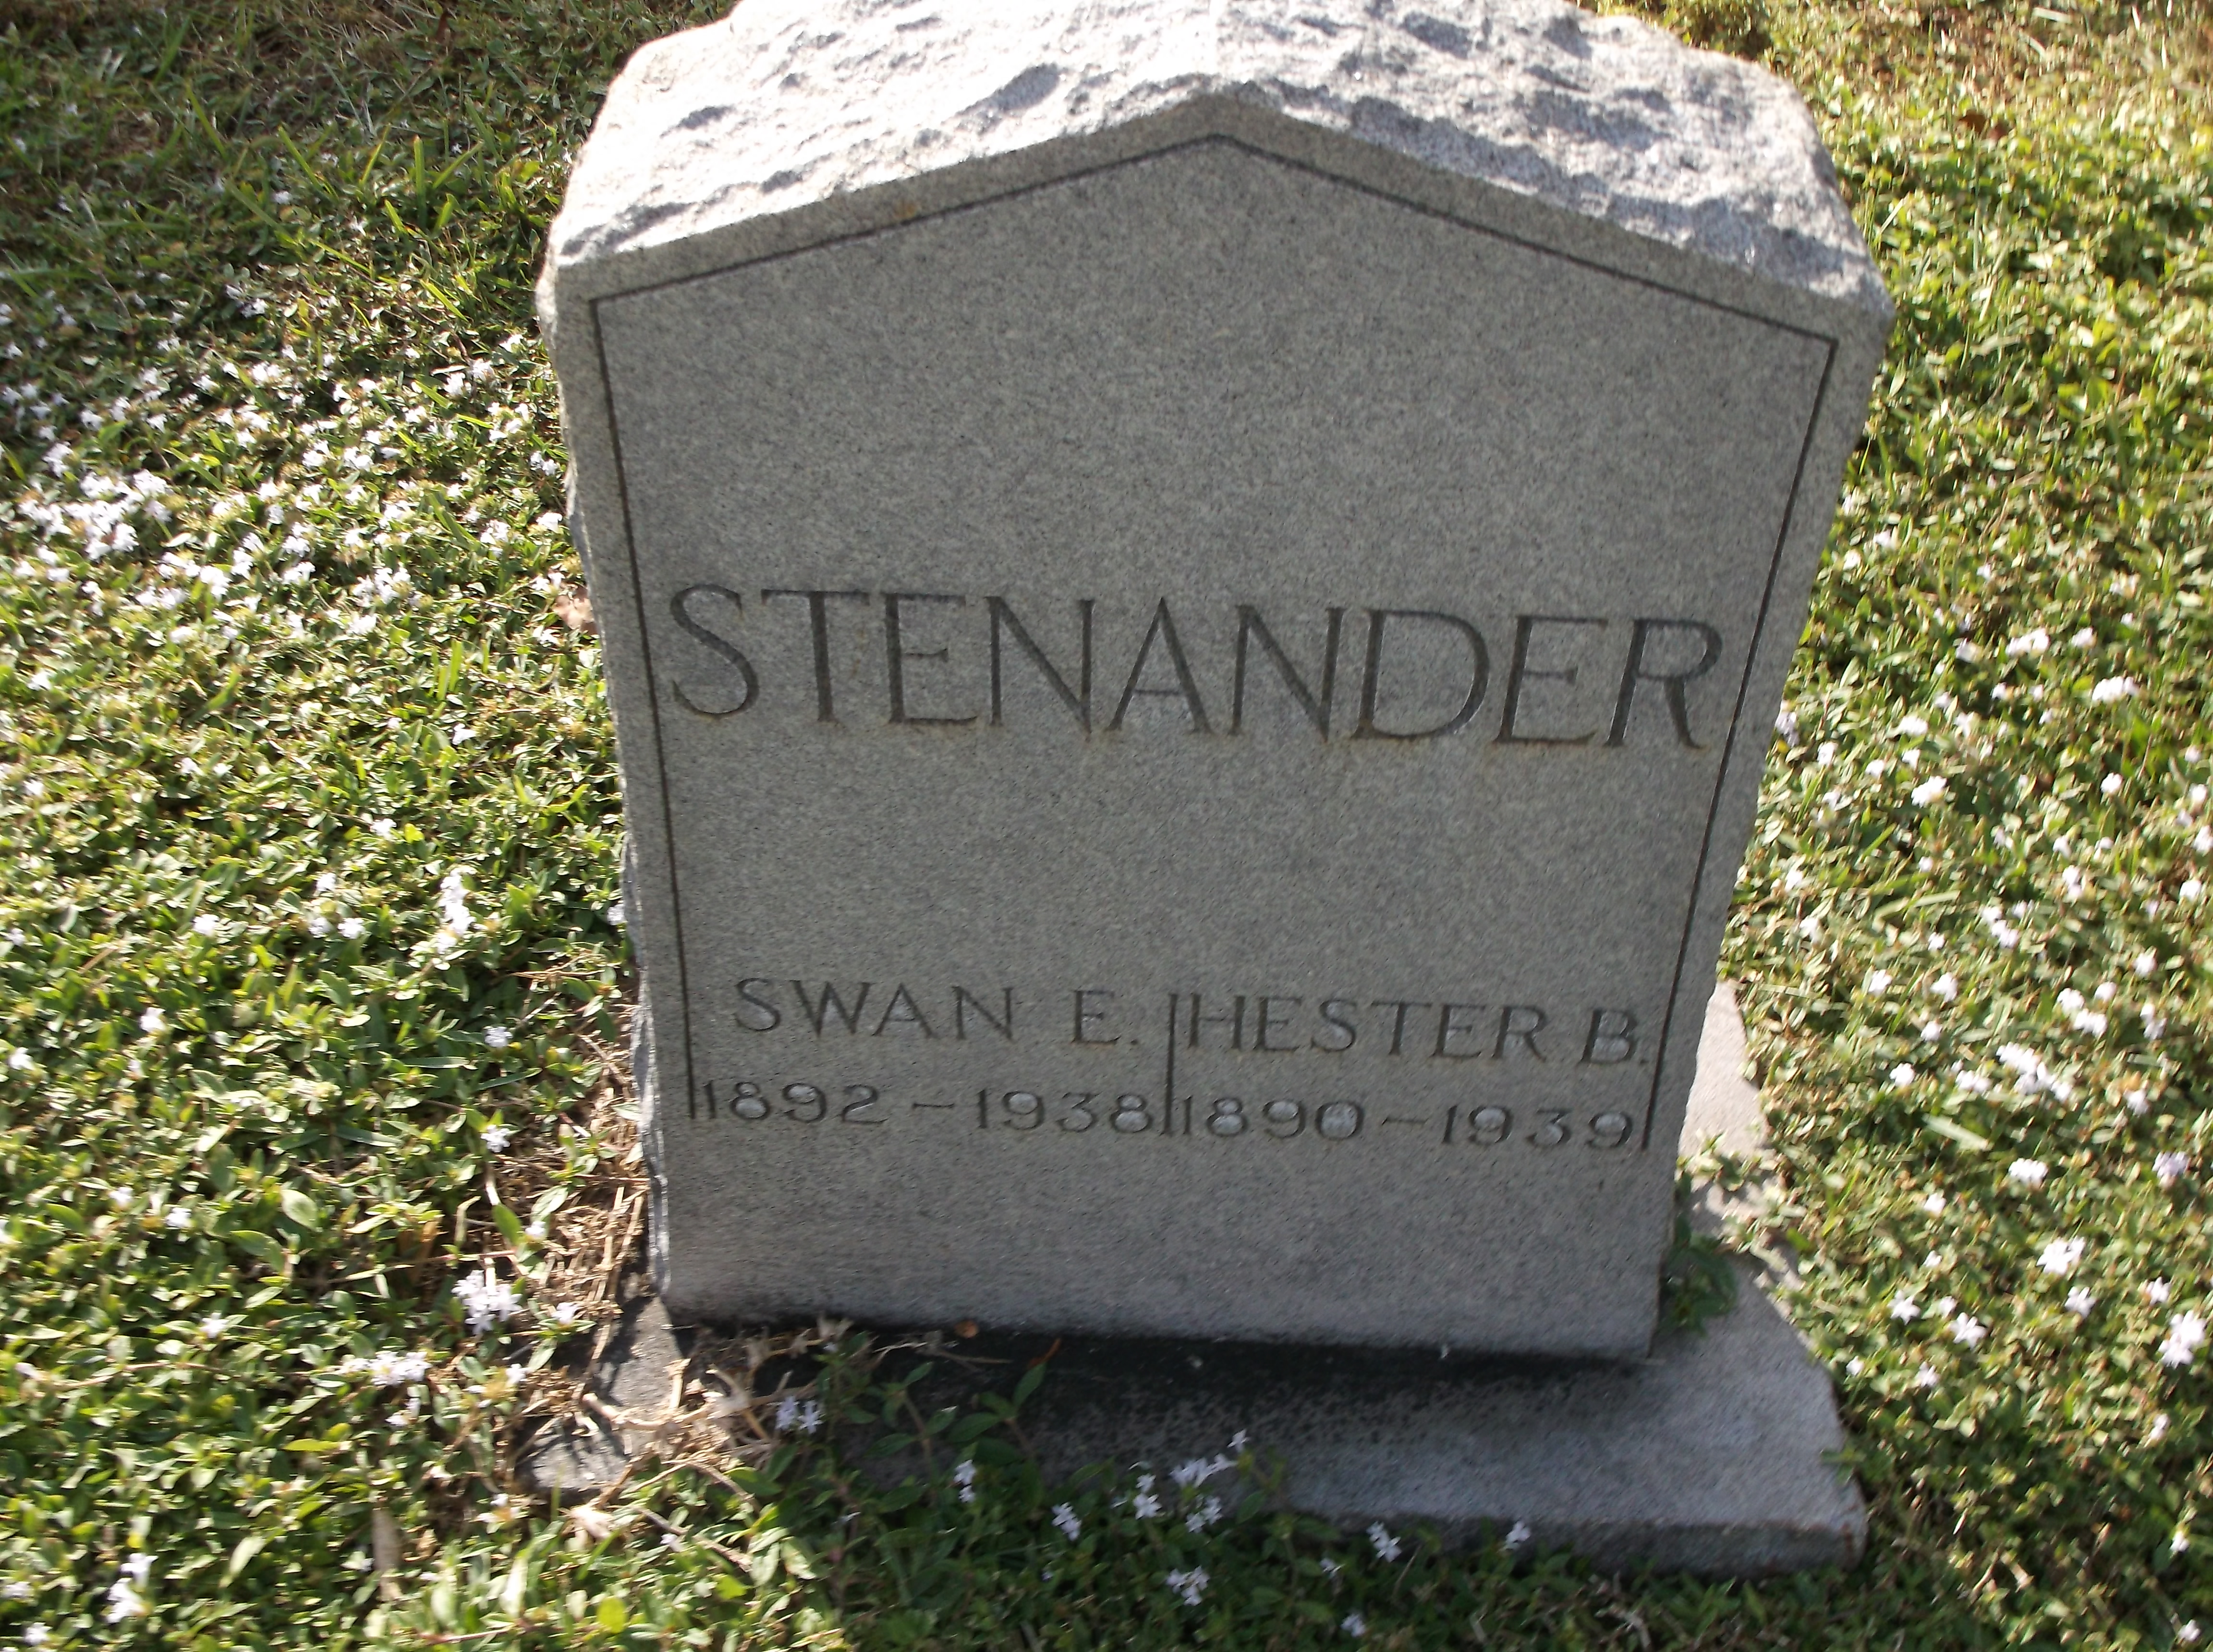 Swan E Stenander